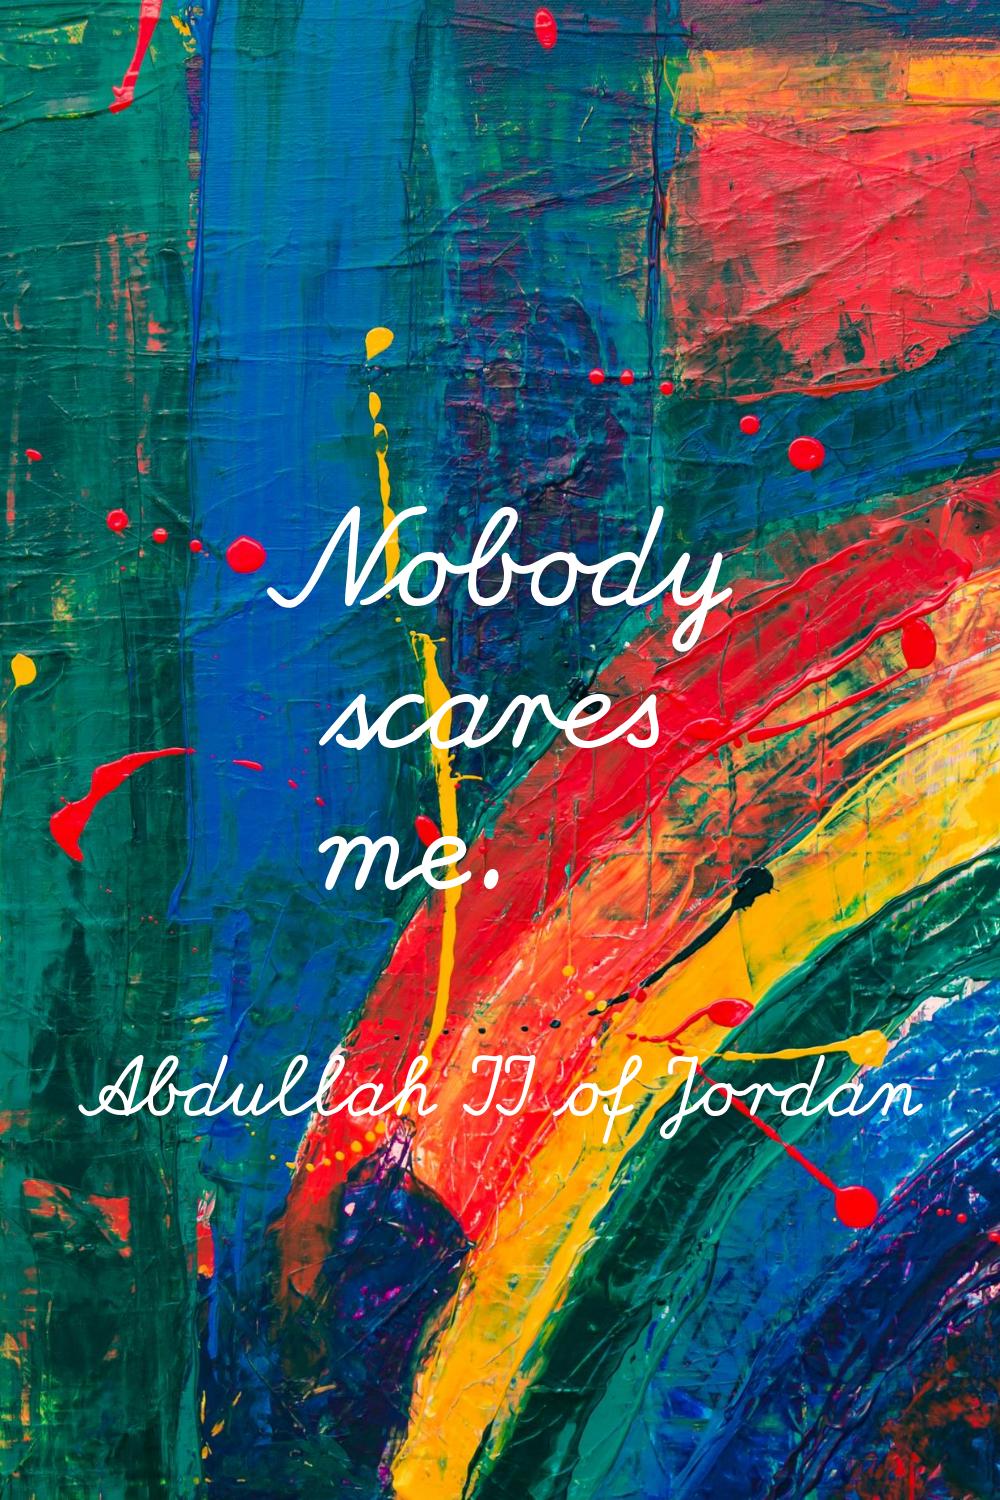 Nobody scares me.